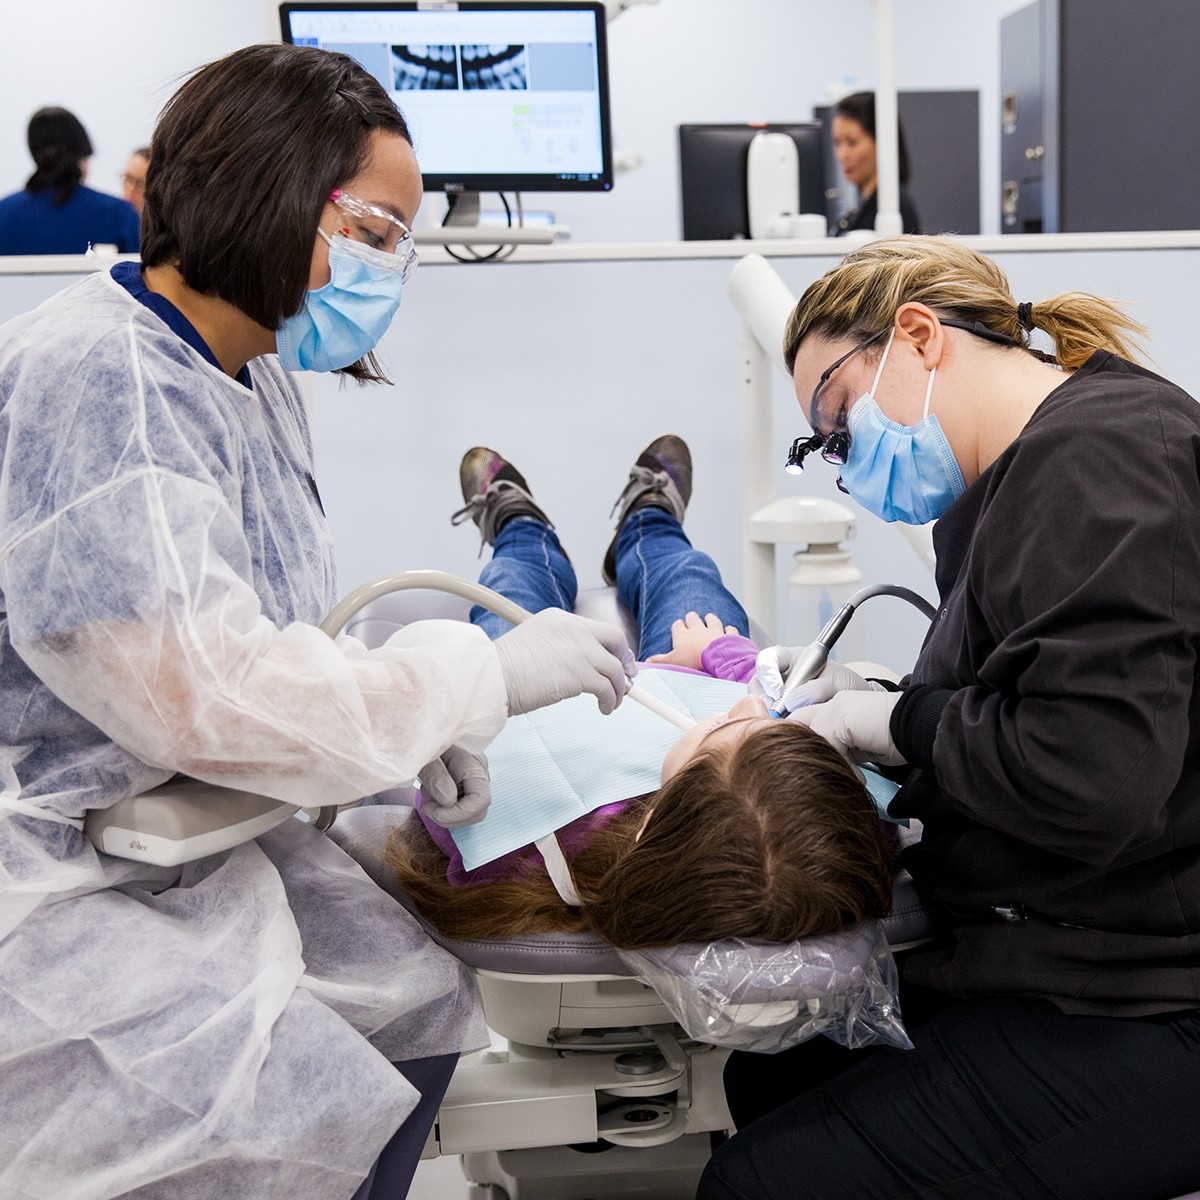 Dental hygiene students providing care to a child